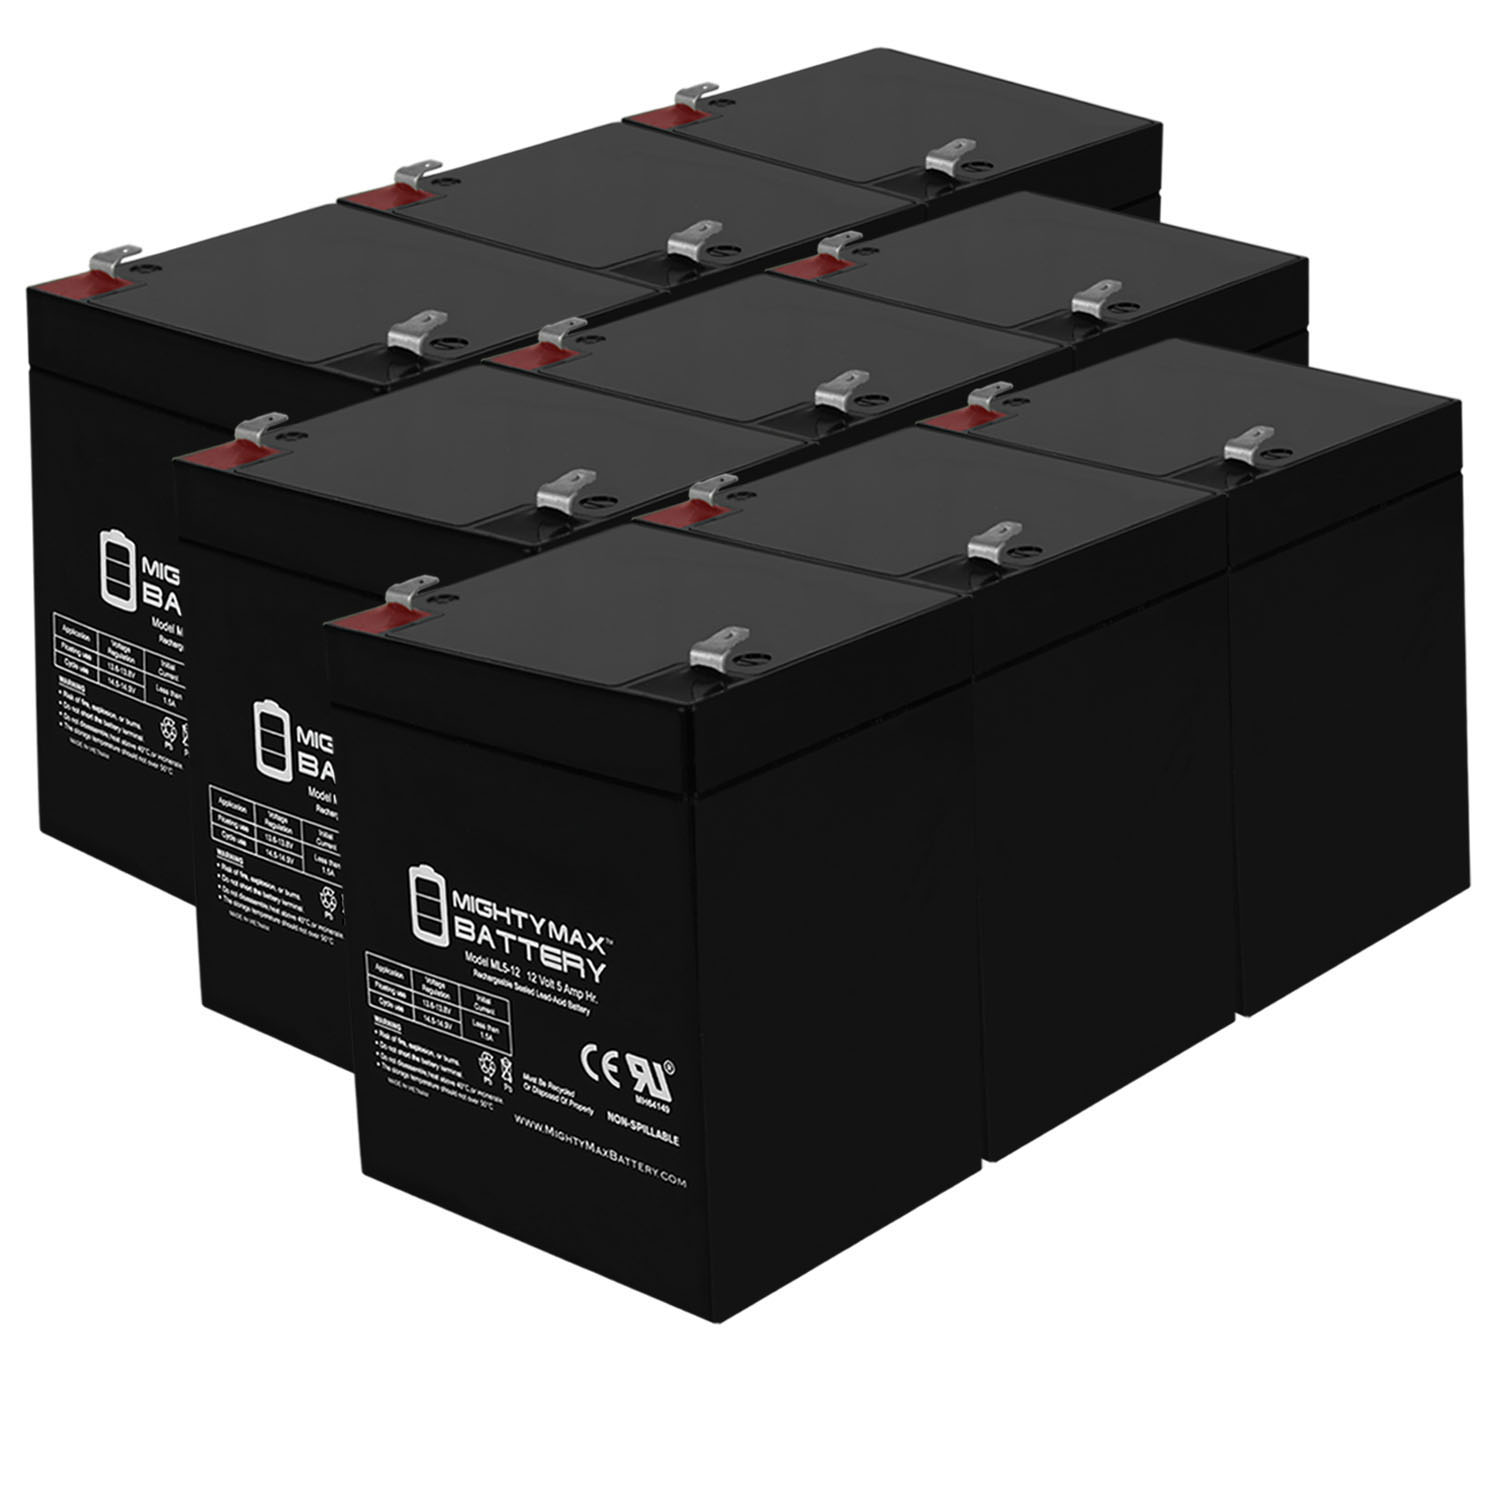 12V 5AH SLA Replacement Battery for Ditek DTK-BU600PLUS - 9 Pack